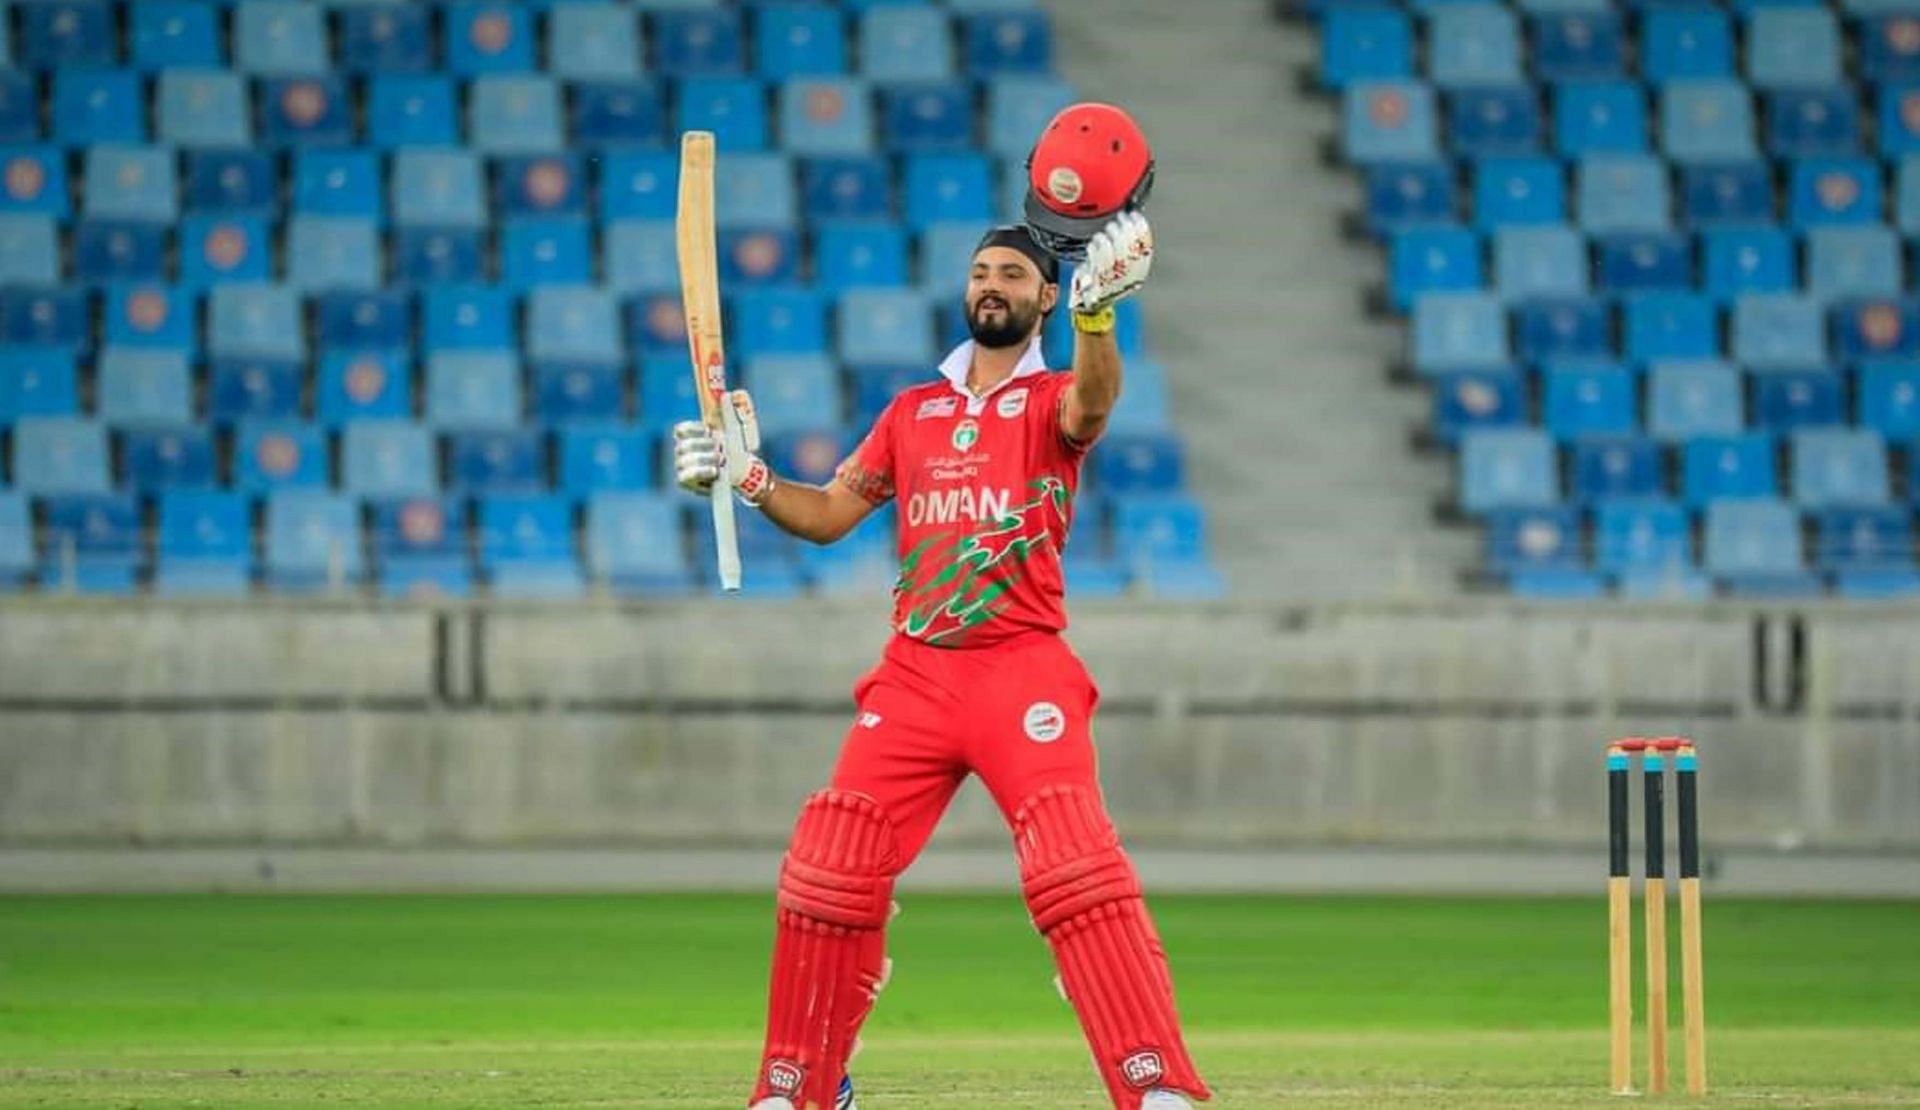 Jatinder Singh (Image Courtesy: Oman Cricket)